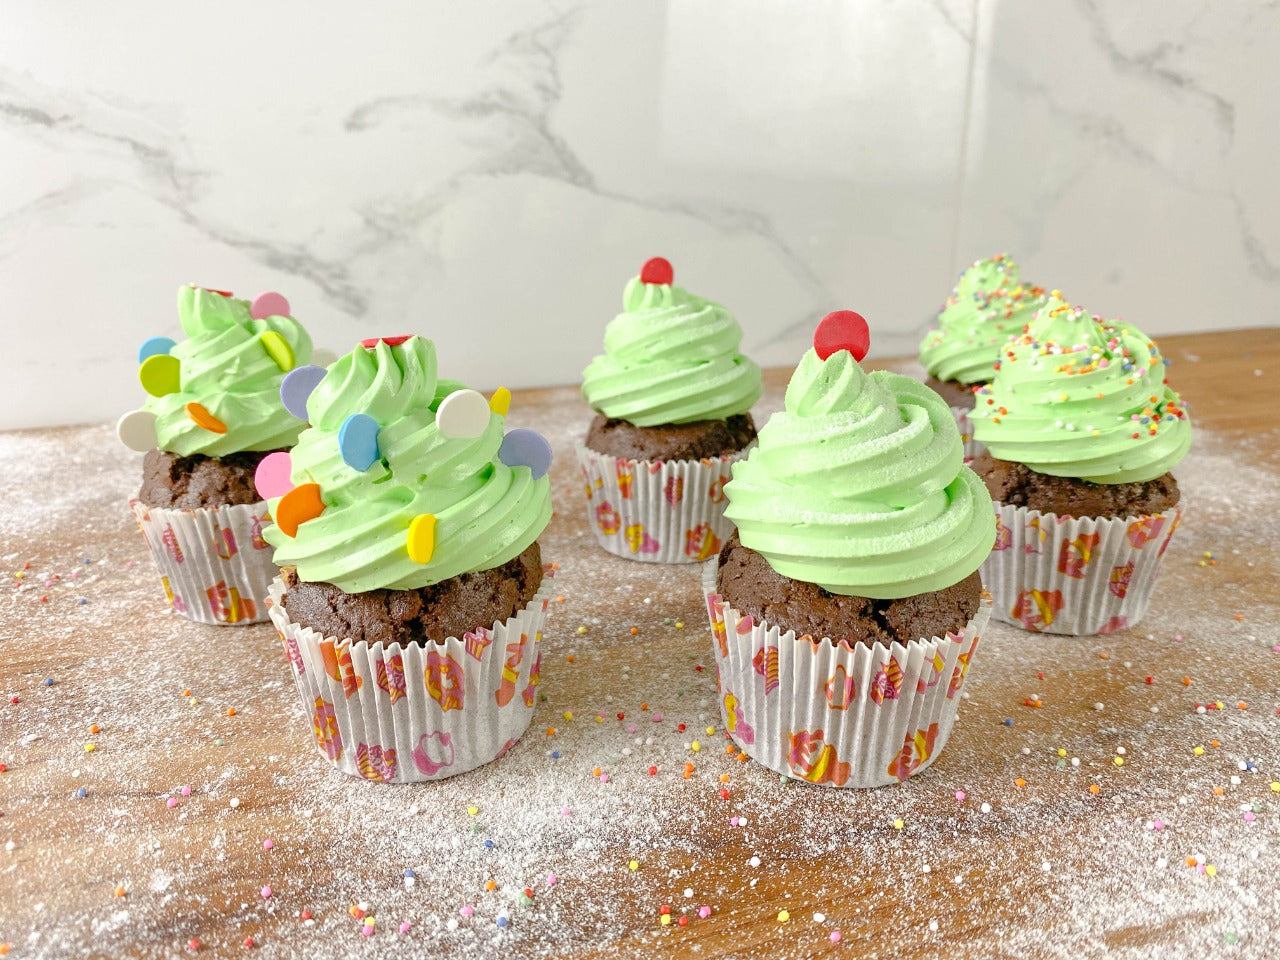 Recipe of The Week : Christmas Tree Cupcake